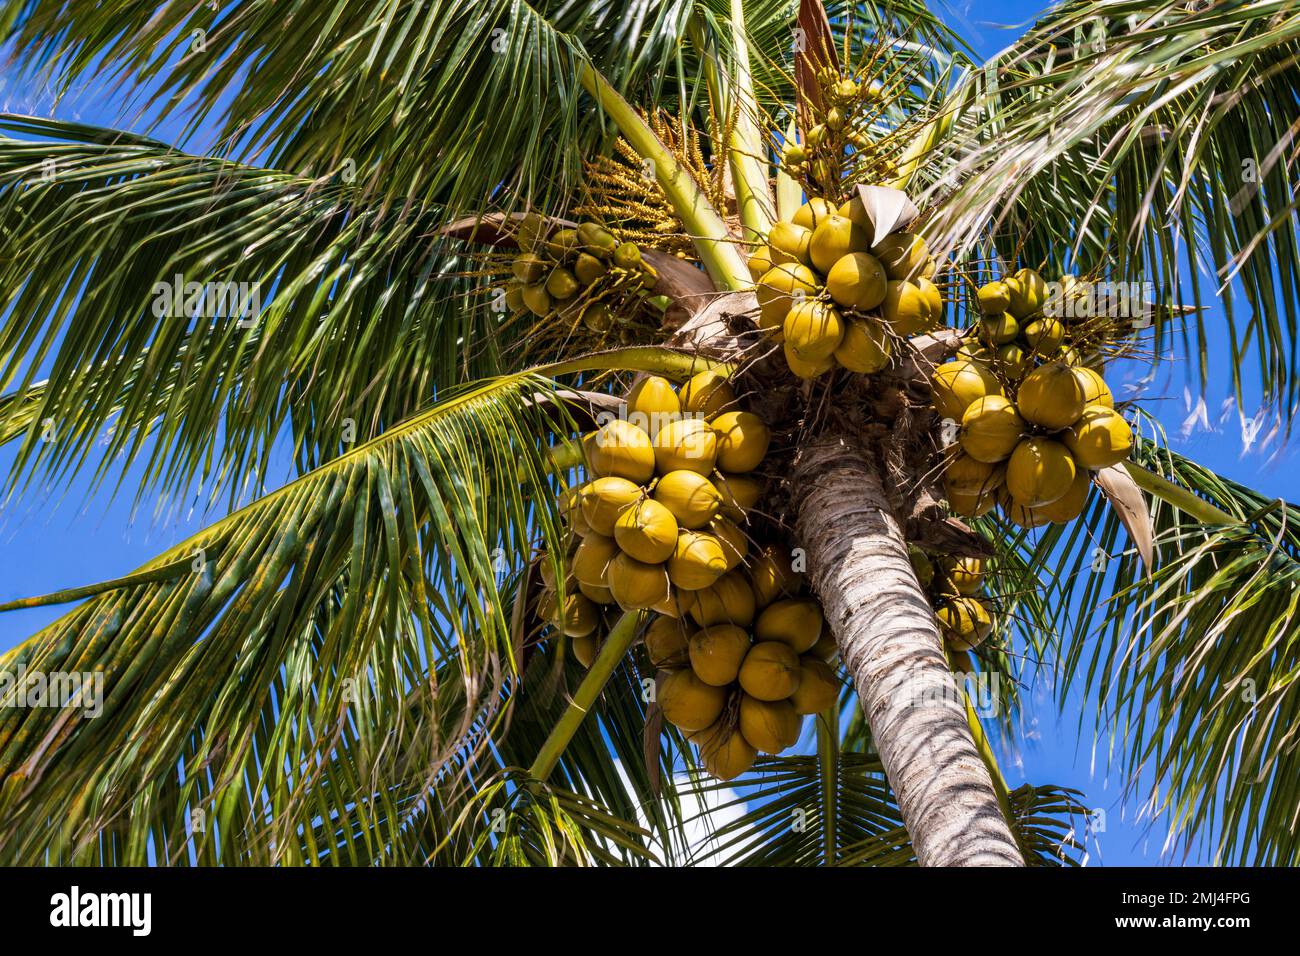 Coconut tree (Cocos nucifera), palm tree with ripe coconuts, Playa del Carmen, Quintana Roo, Mexico, North America, America Stock Photo